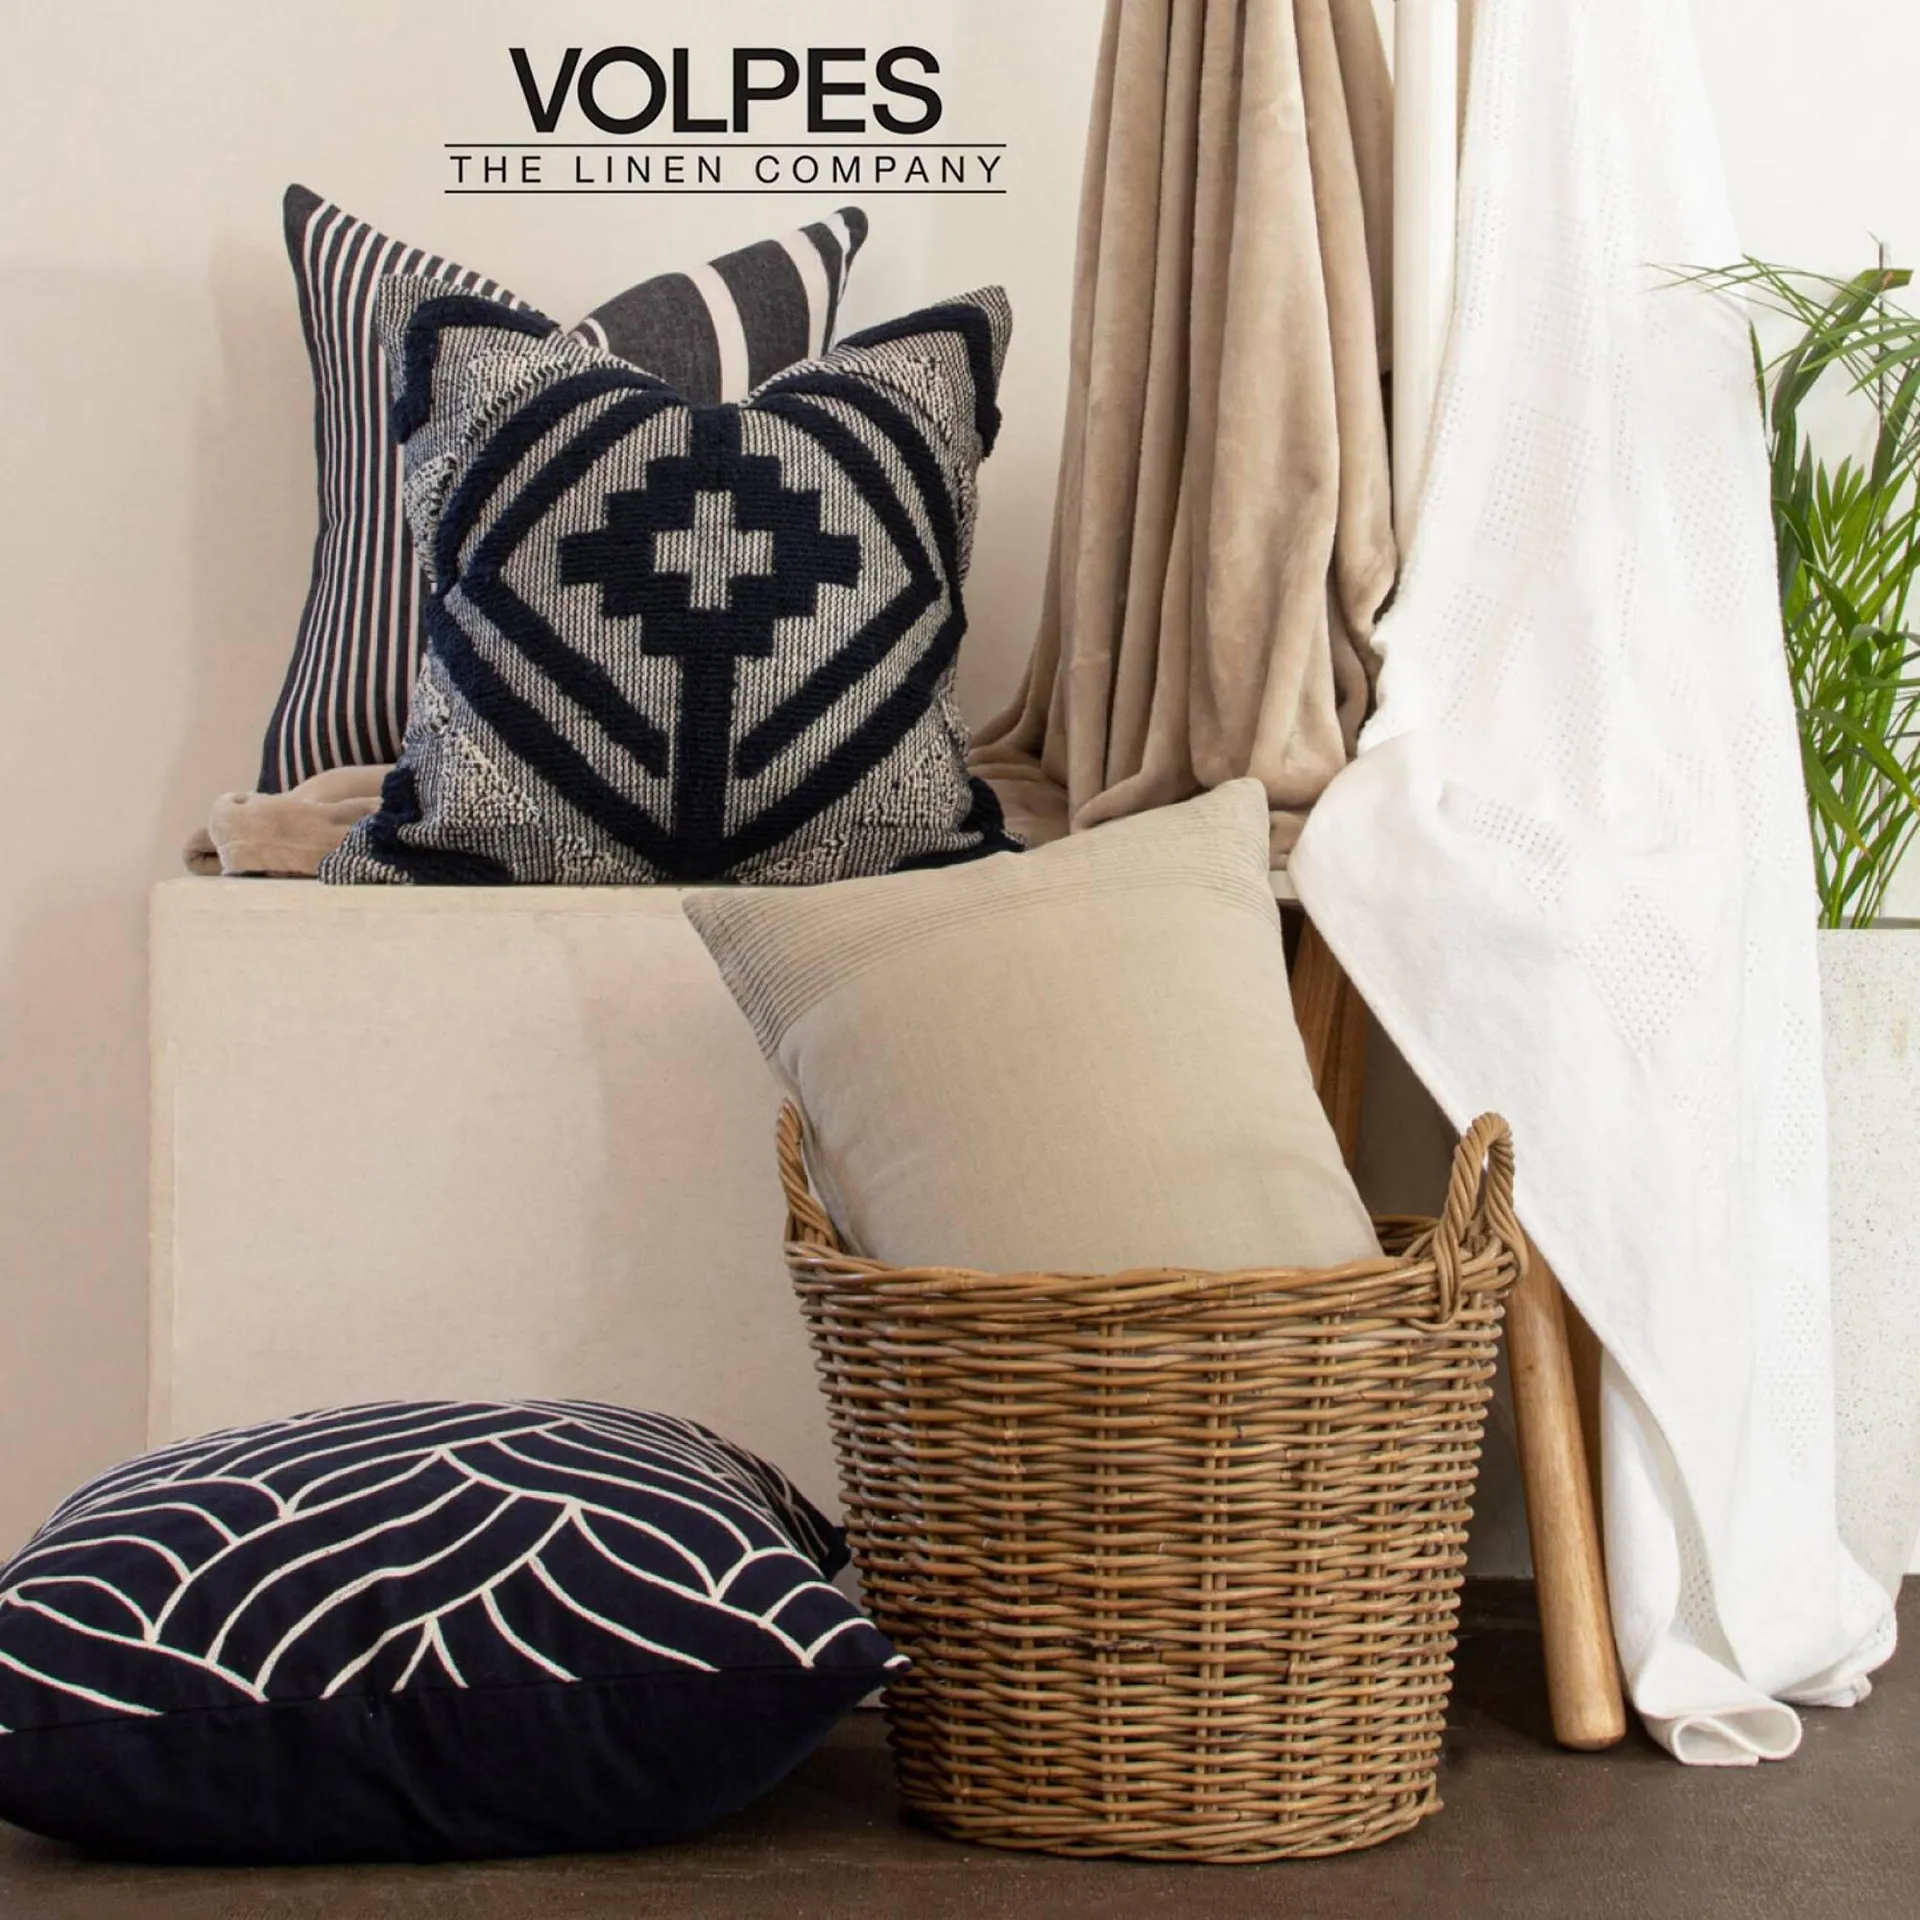 Volpes catalogue - 1